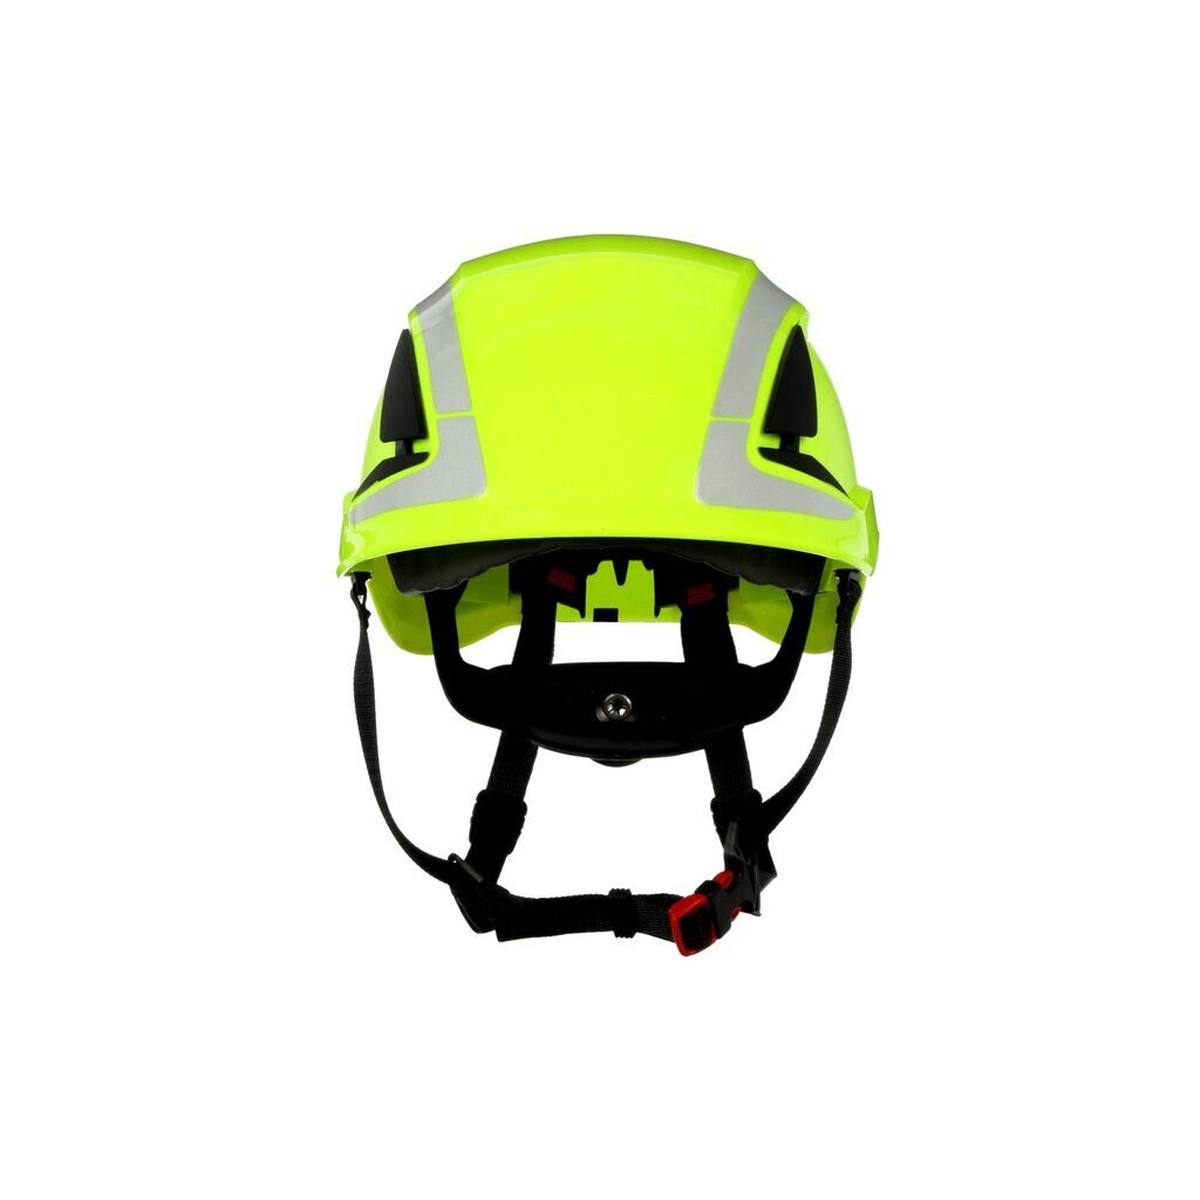 3M SecureFit safety helmet, X5014V-CE, neon green, ventilated, reflective, CE